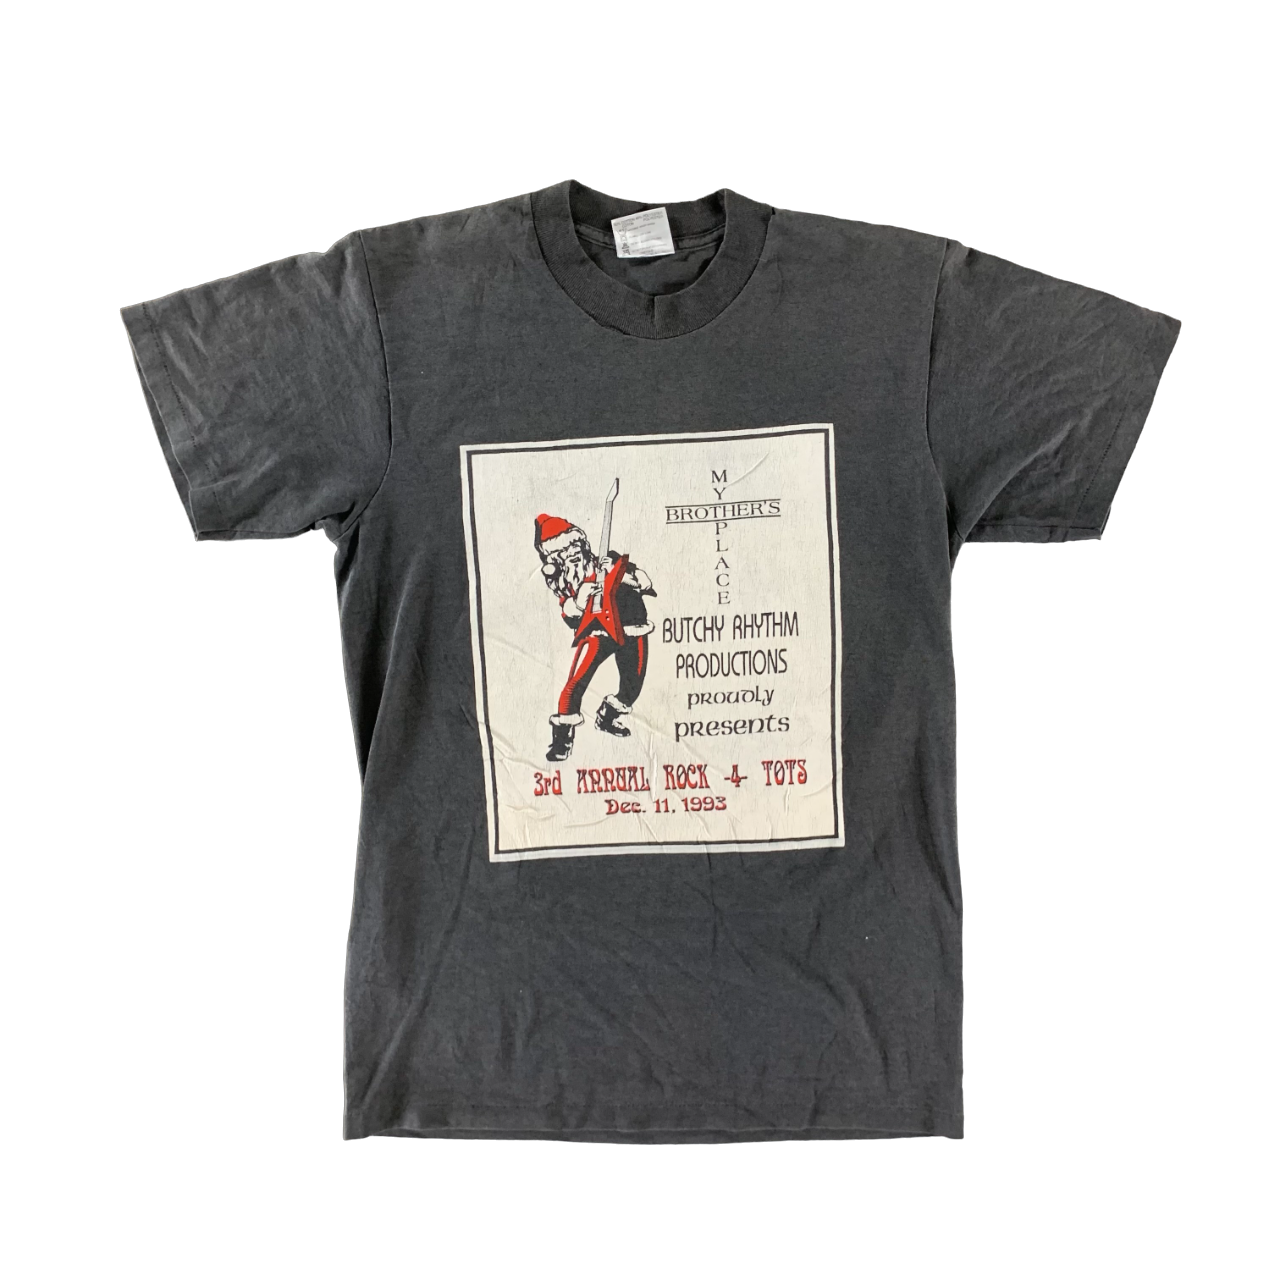 Vintage 1993 Rock-4-Tots T-shirt size Medium